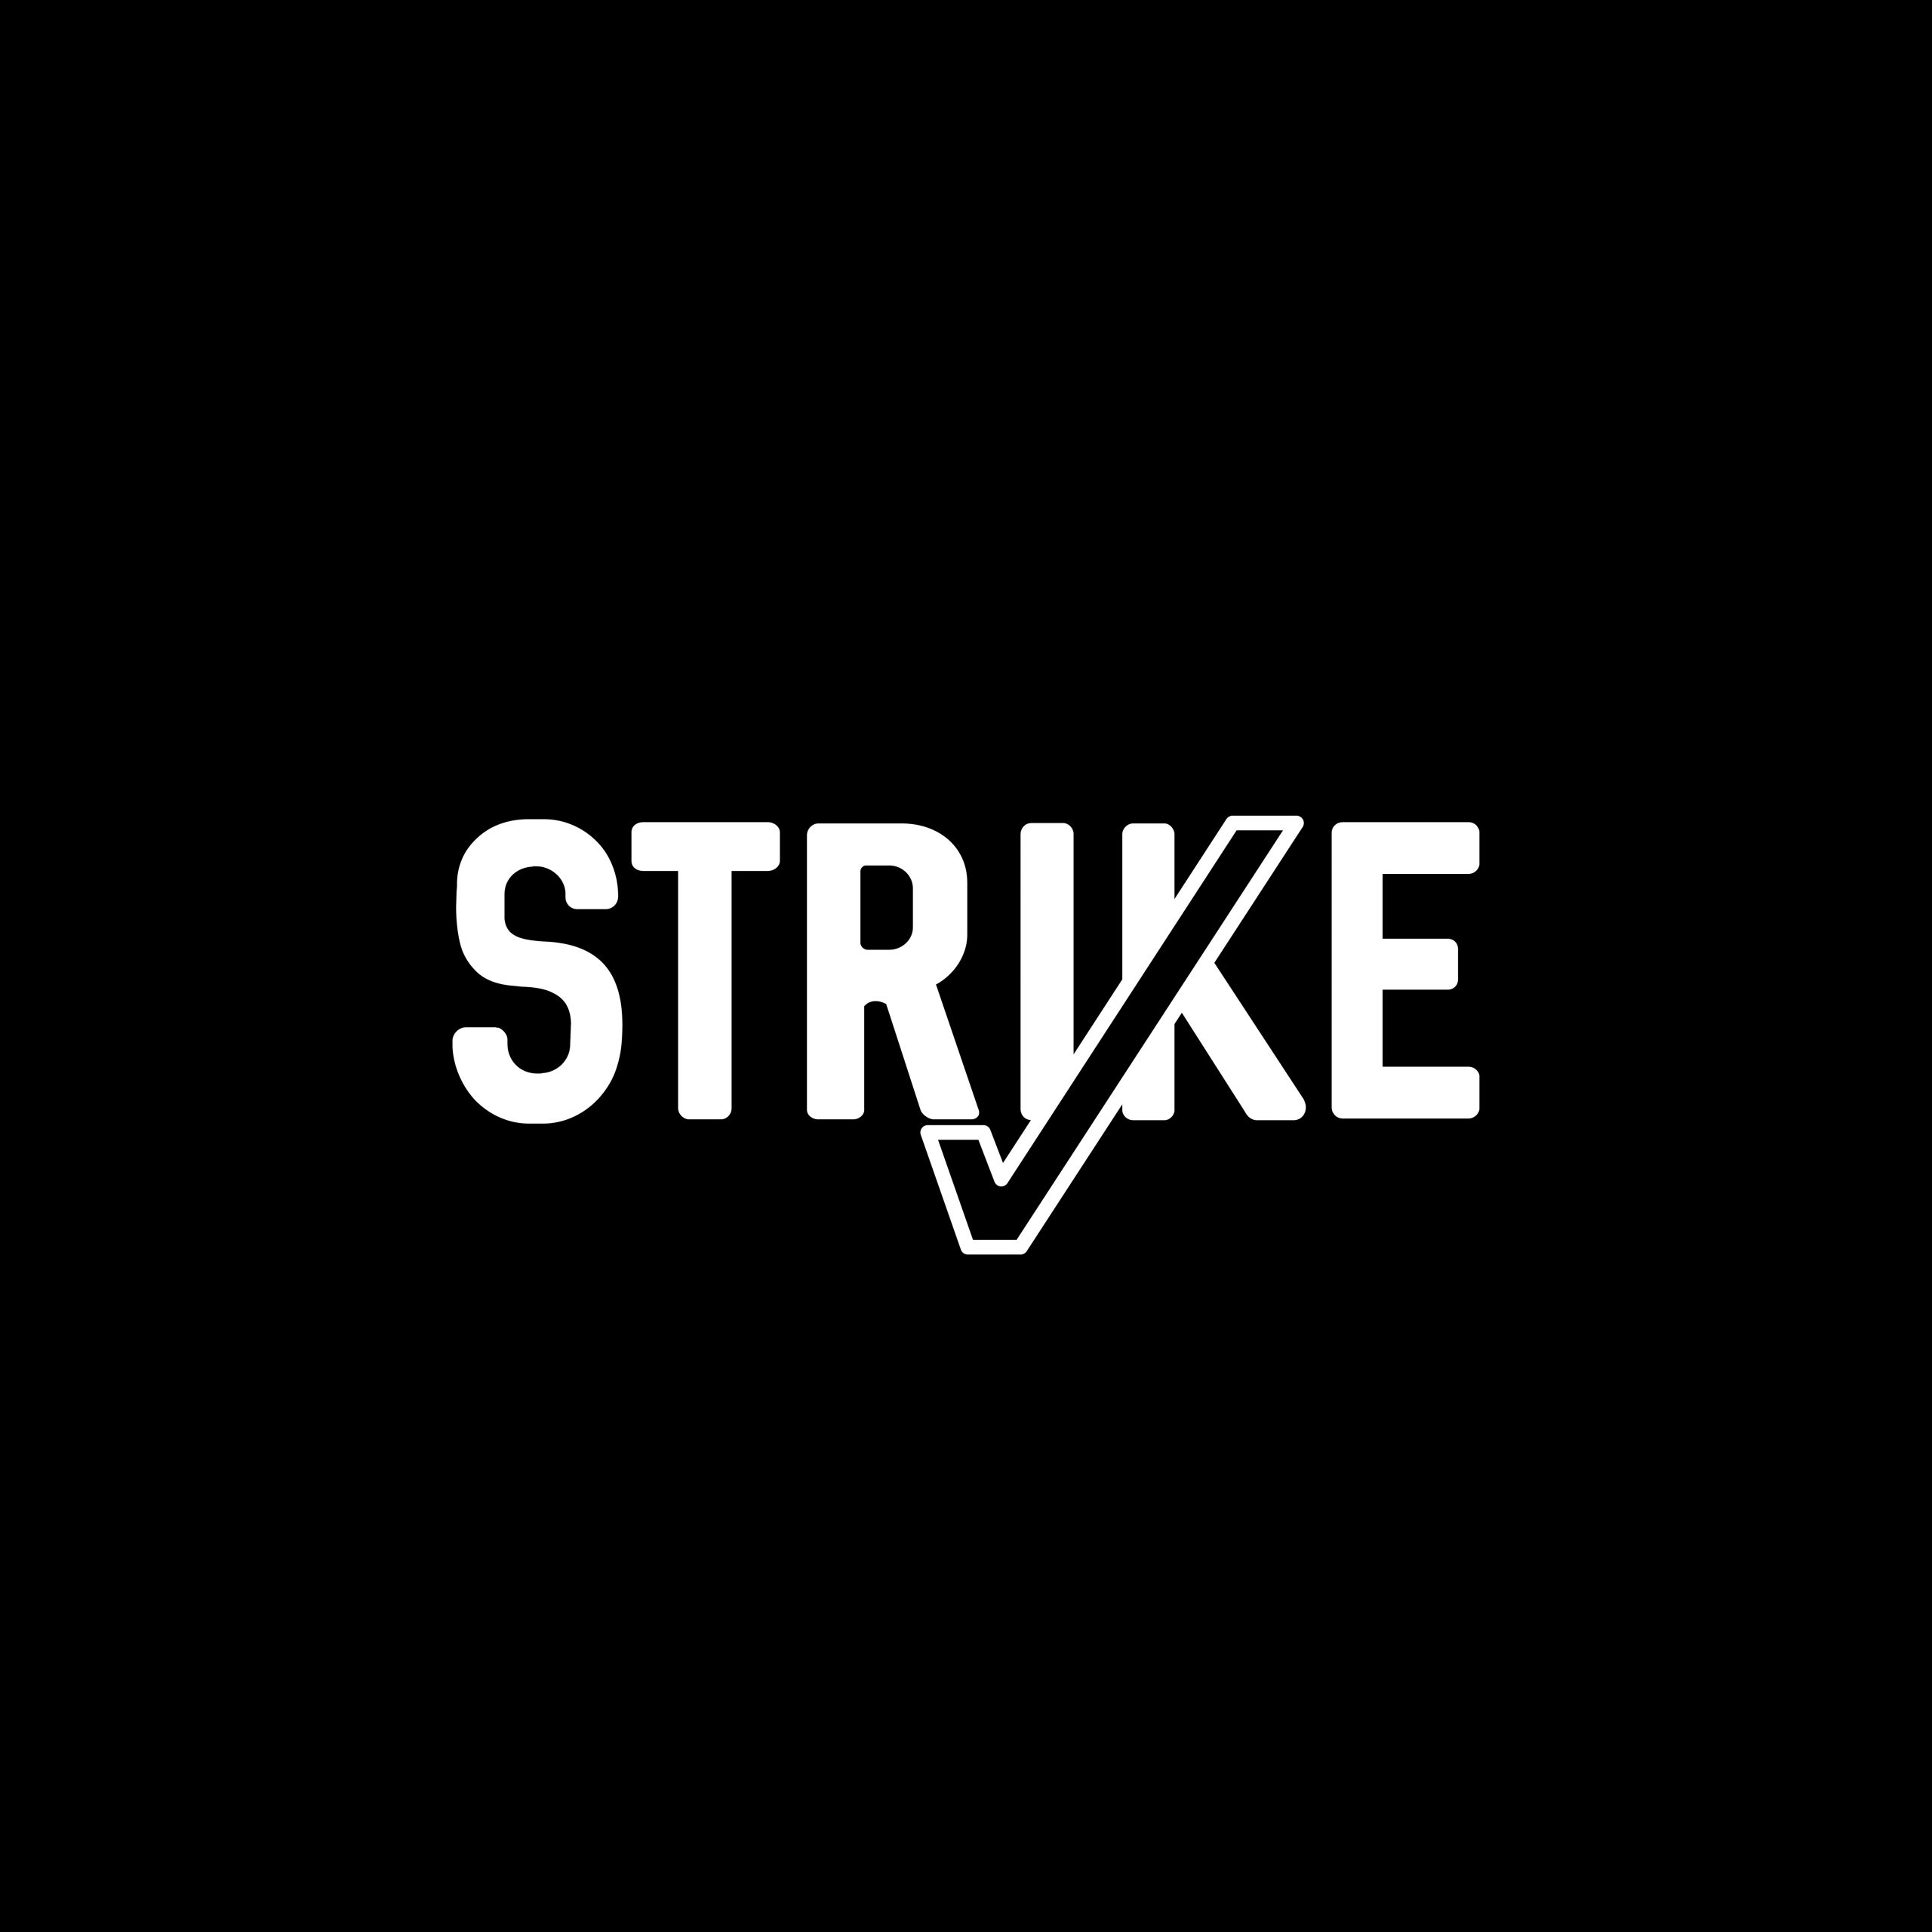 Icone de Strike 